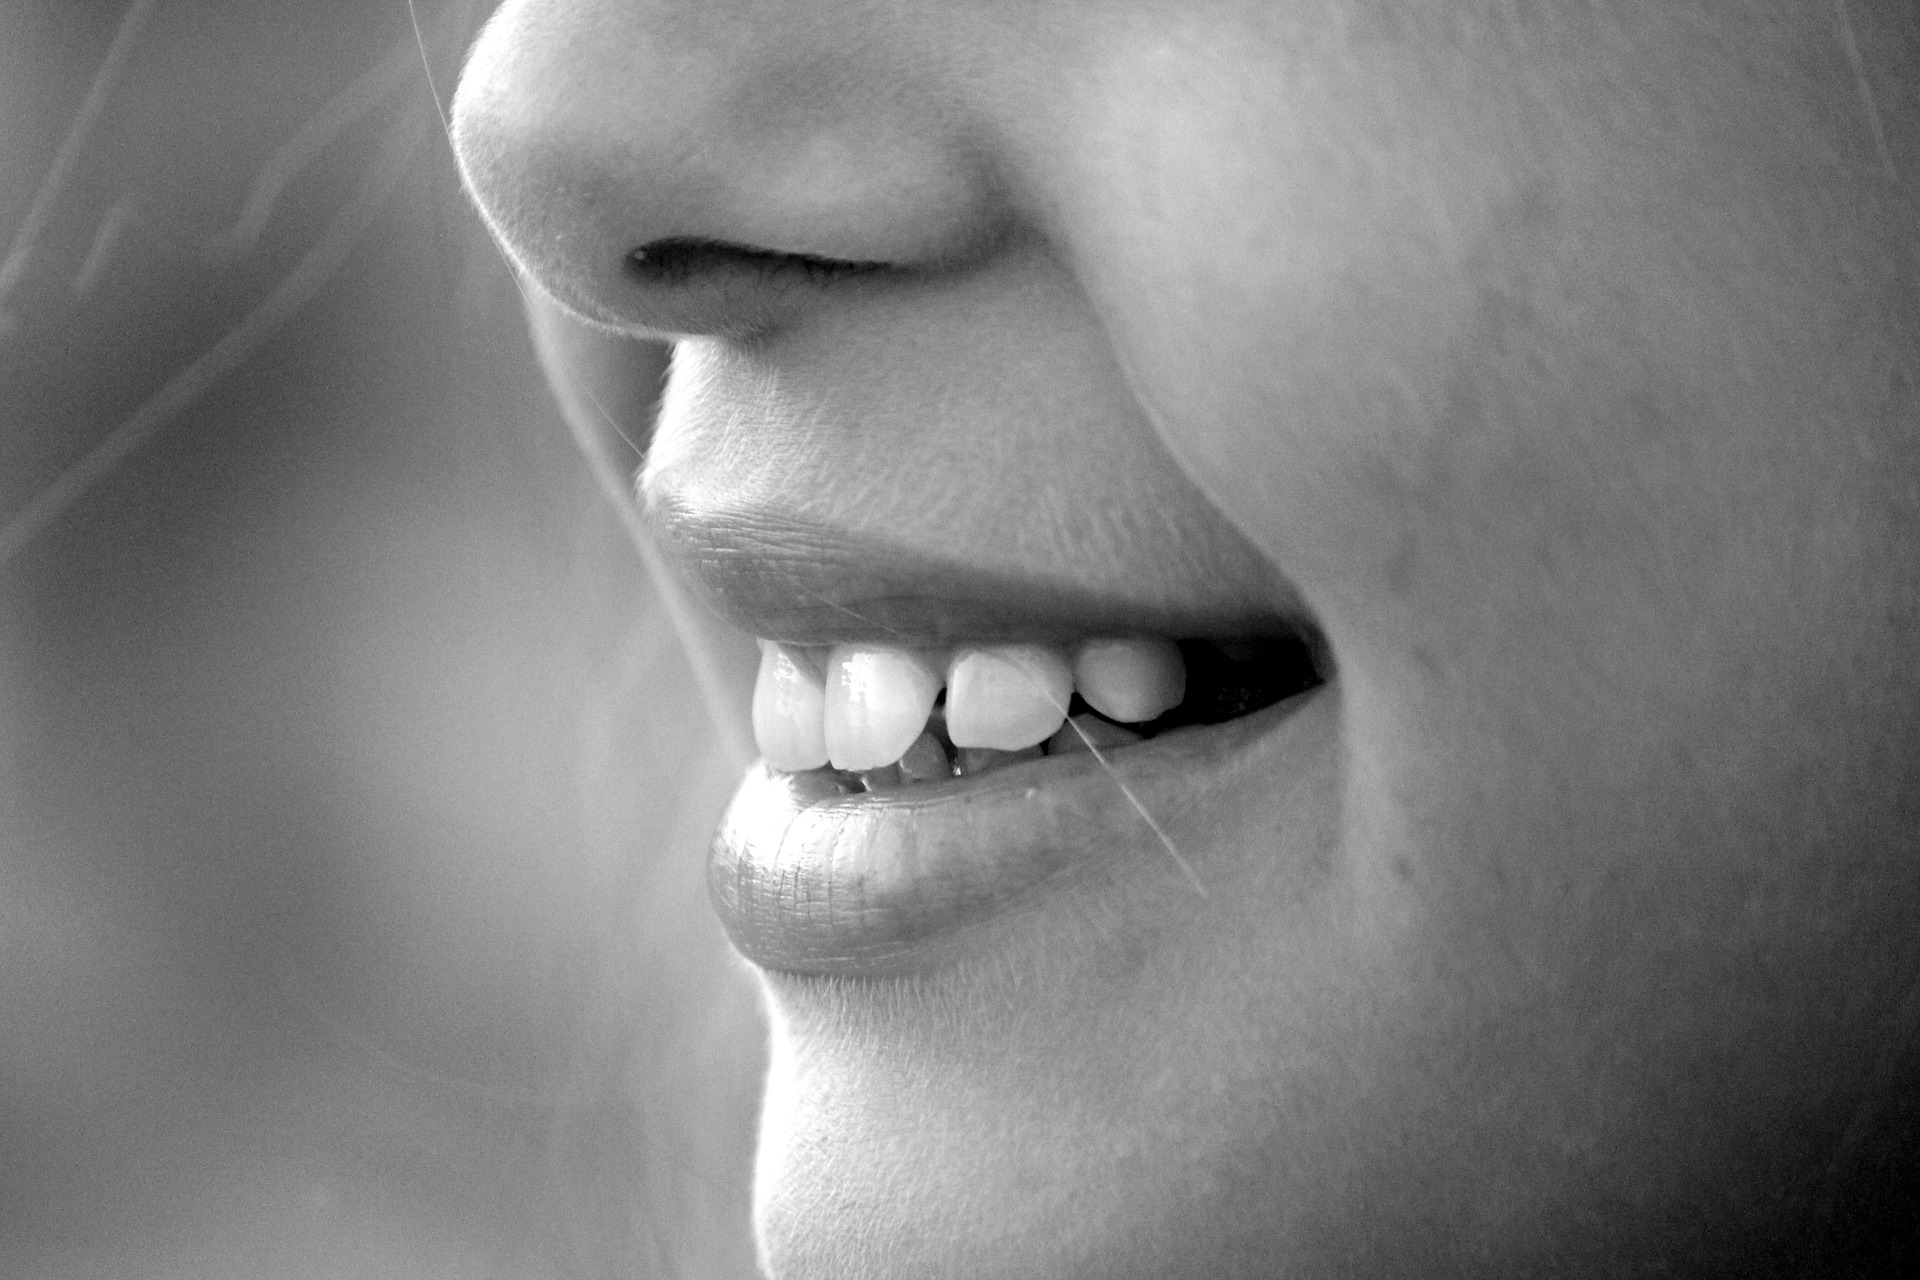 Smile (c) www.pixabay.com